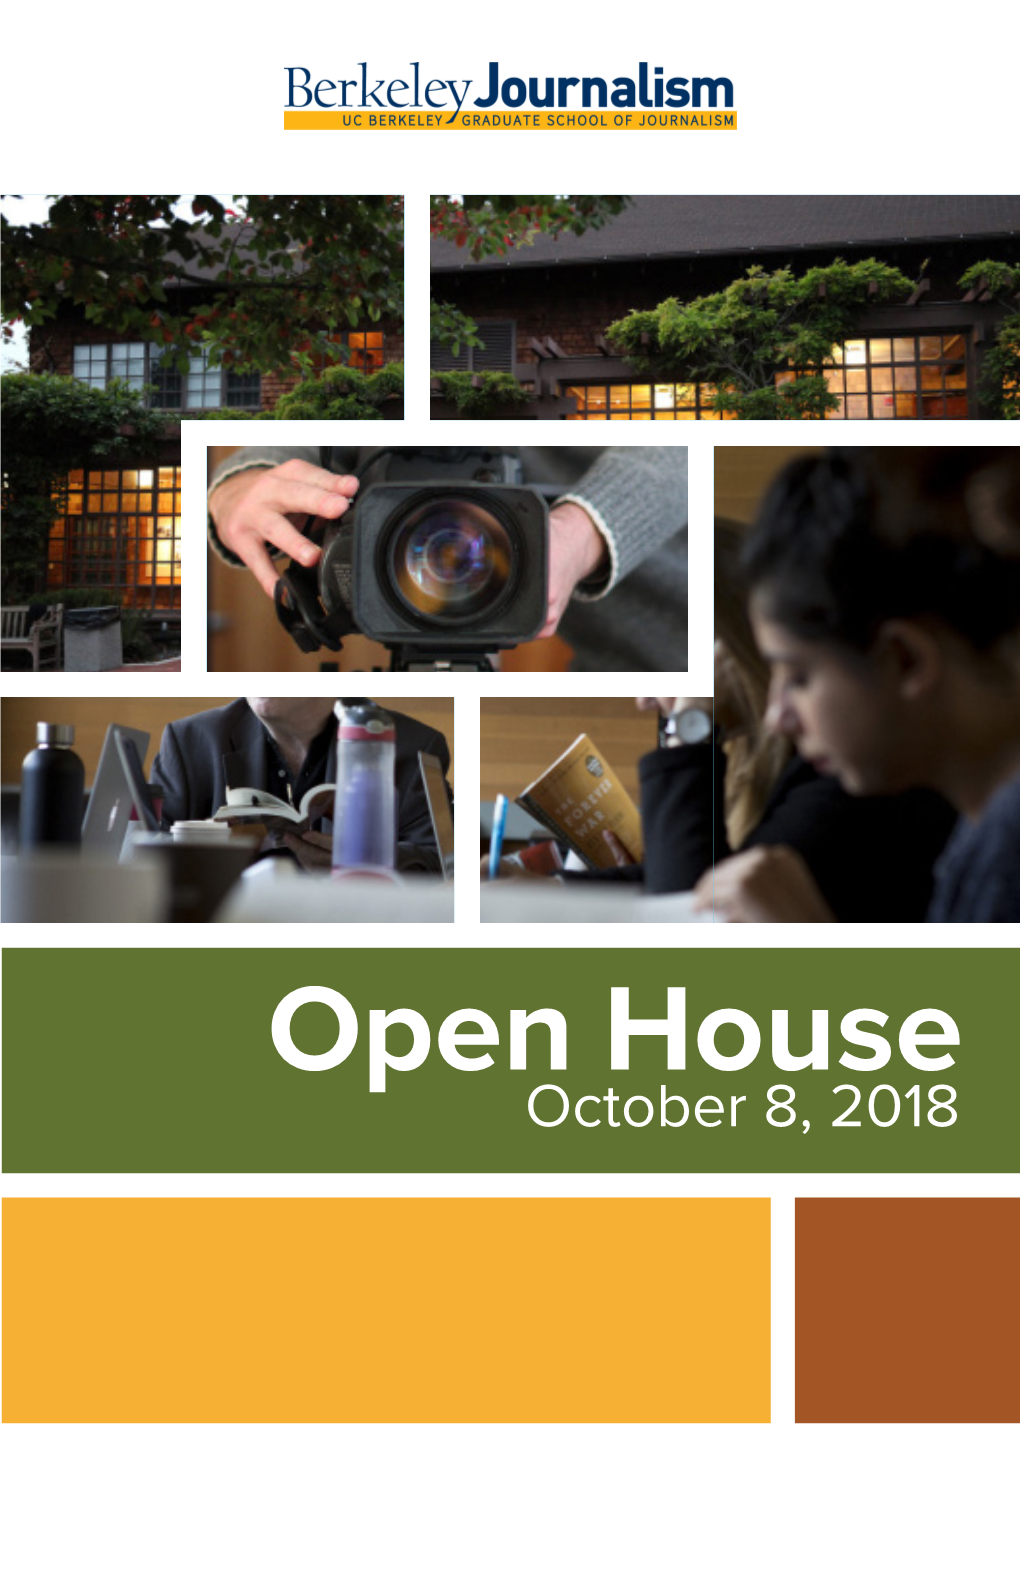 Open House October 8, 2018 Open House Agenda Monday, October 8, 2018 | 8:30 A.M